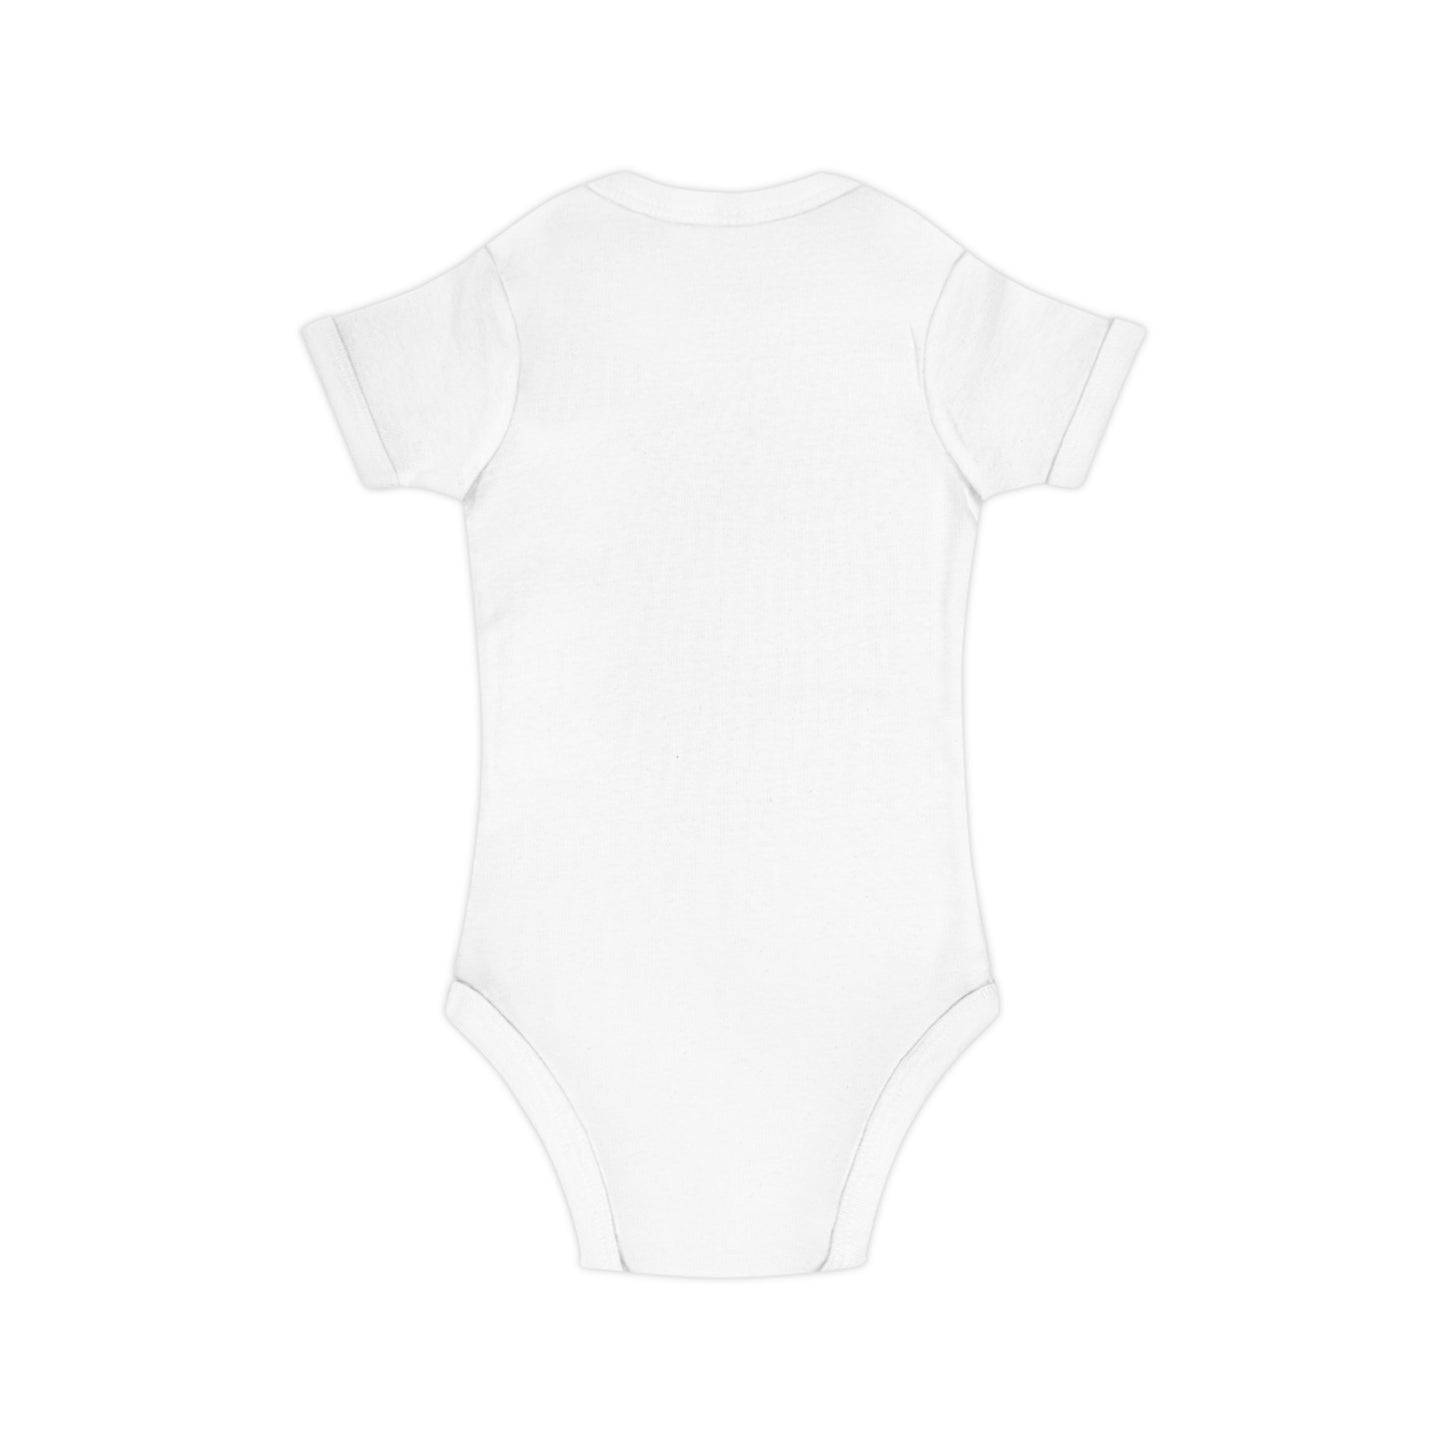 Steelpan Baby Body Suit